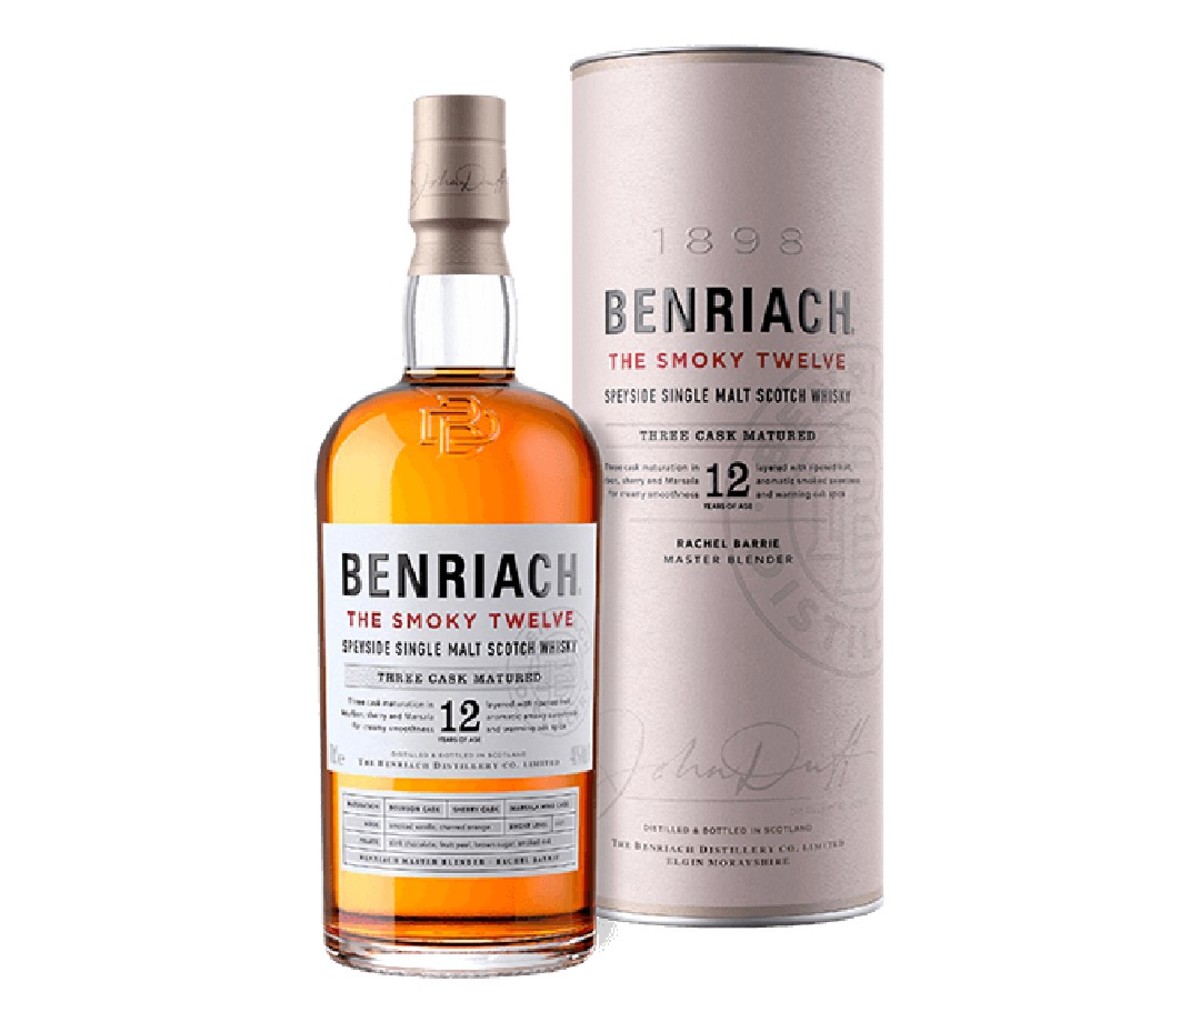 Benriach The Smoky Twelve whisky bottle